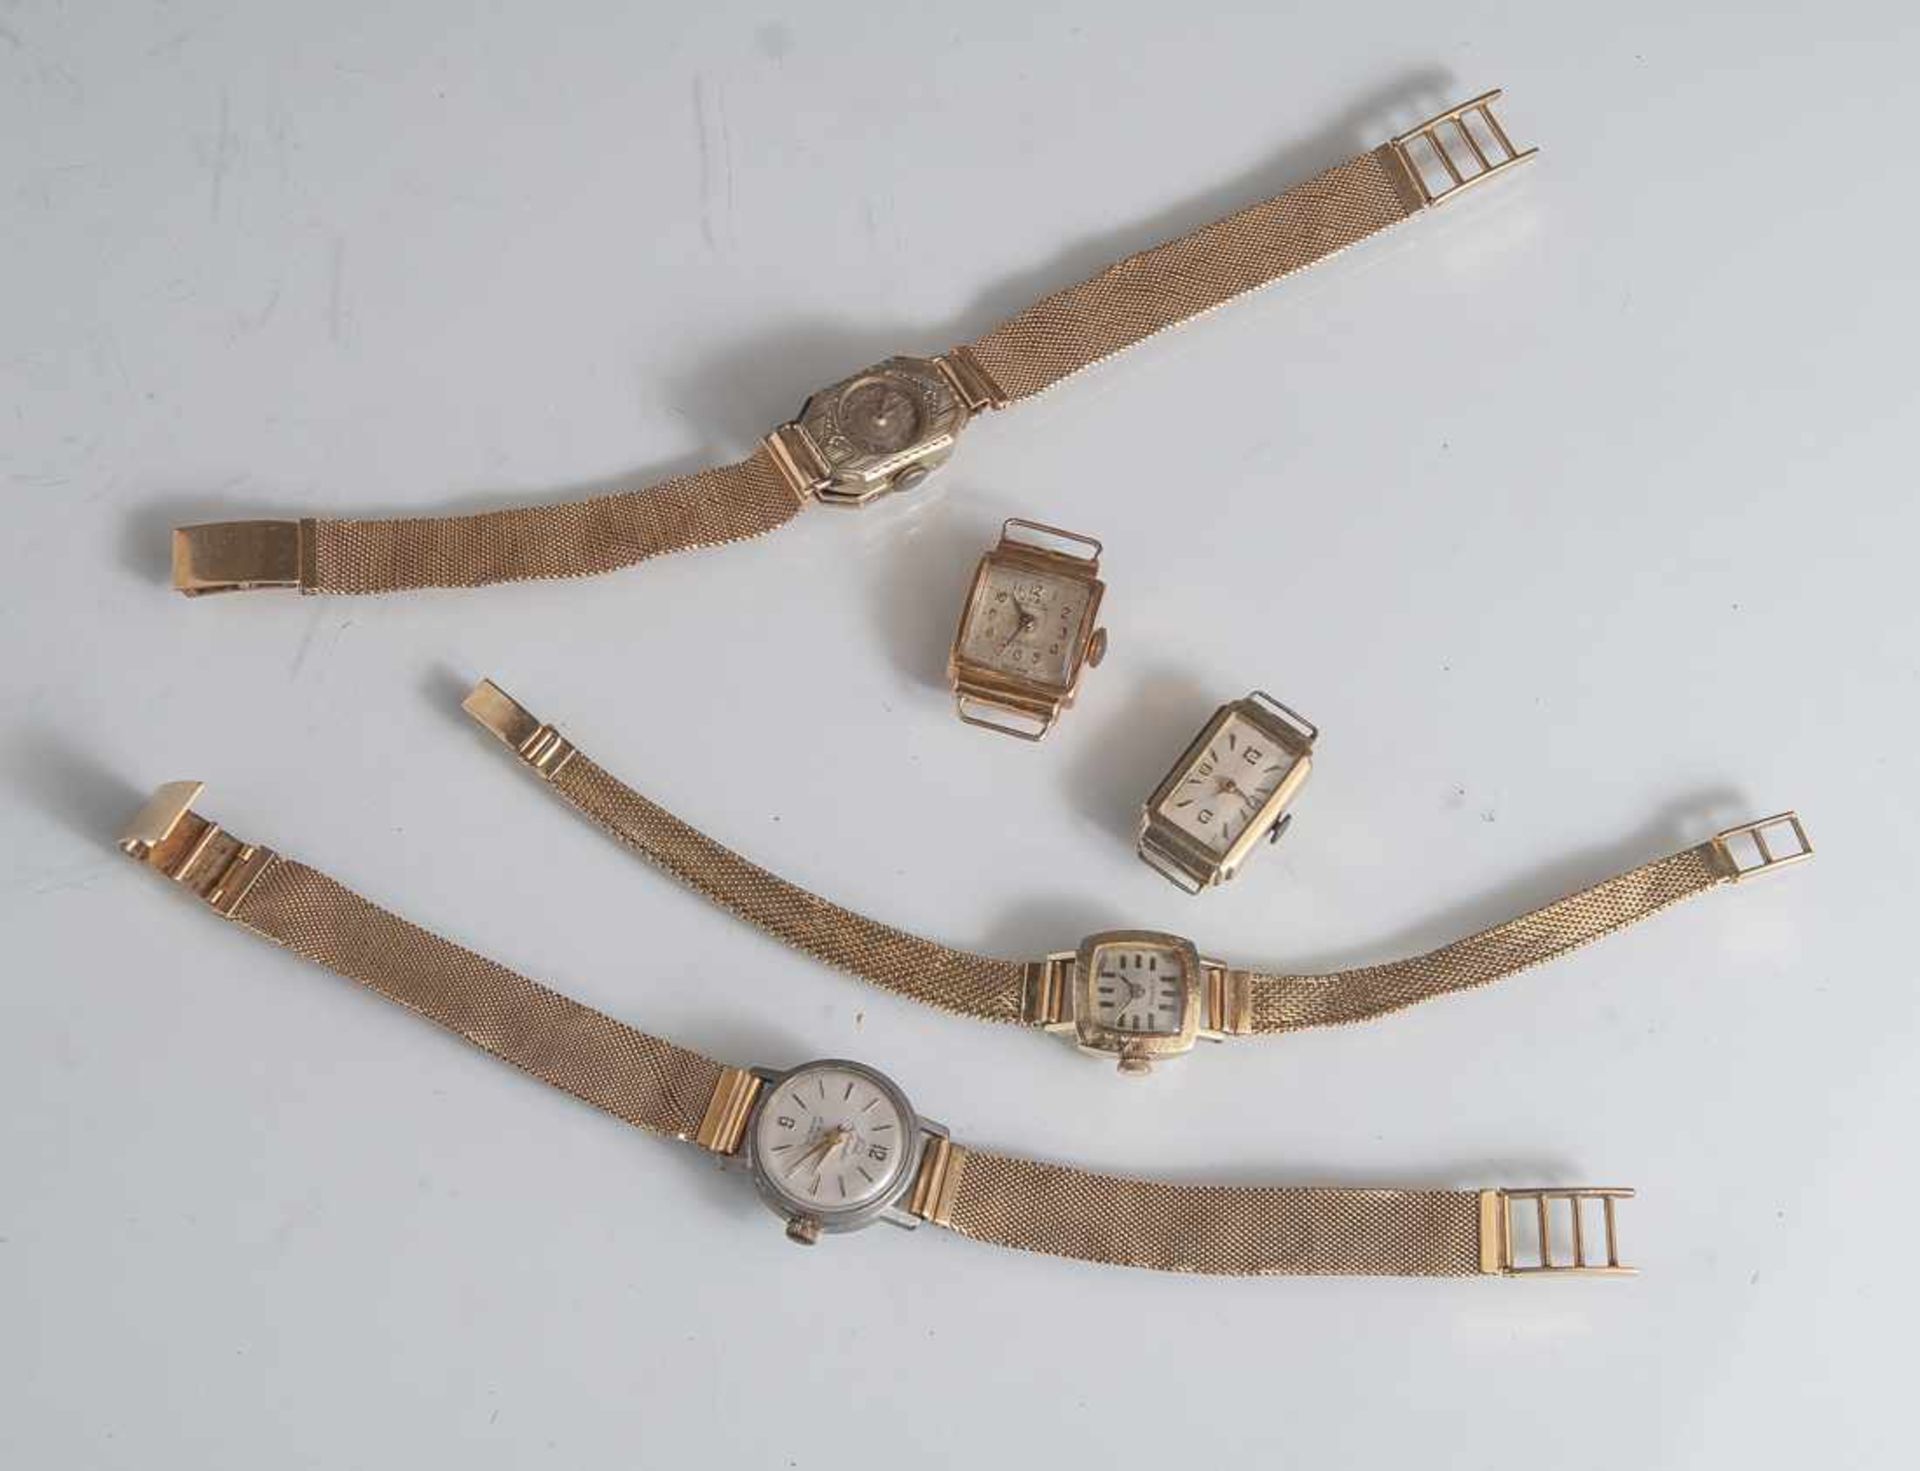 Posten Damenarmbanduhren, Gold 750 und 585, a) rechteckiges Uhrengehäuse, GG 750, mithellem